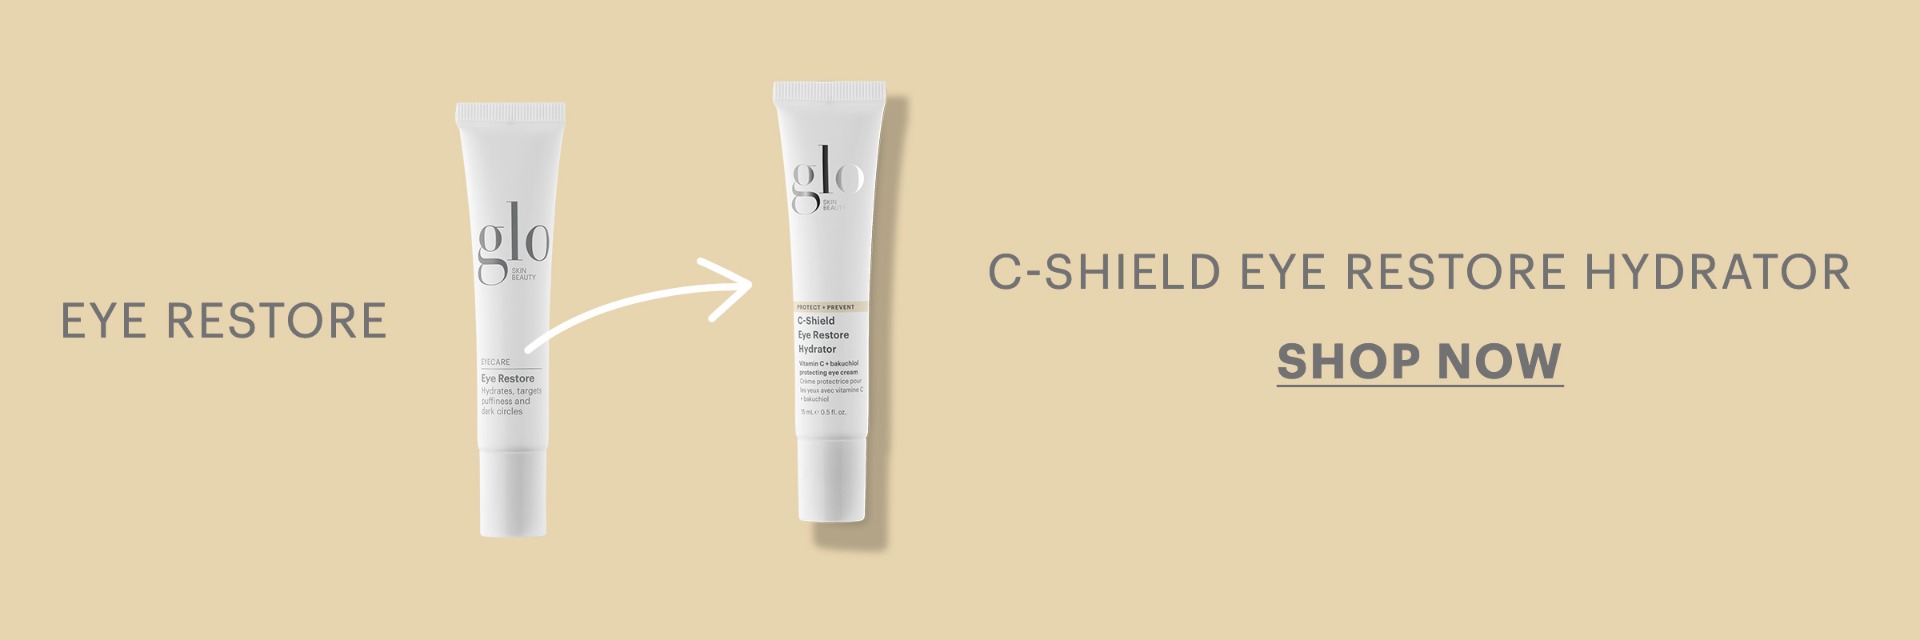 C-Shield Eye Restore Hydrator